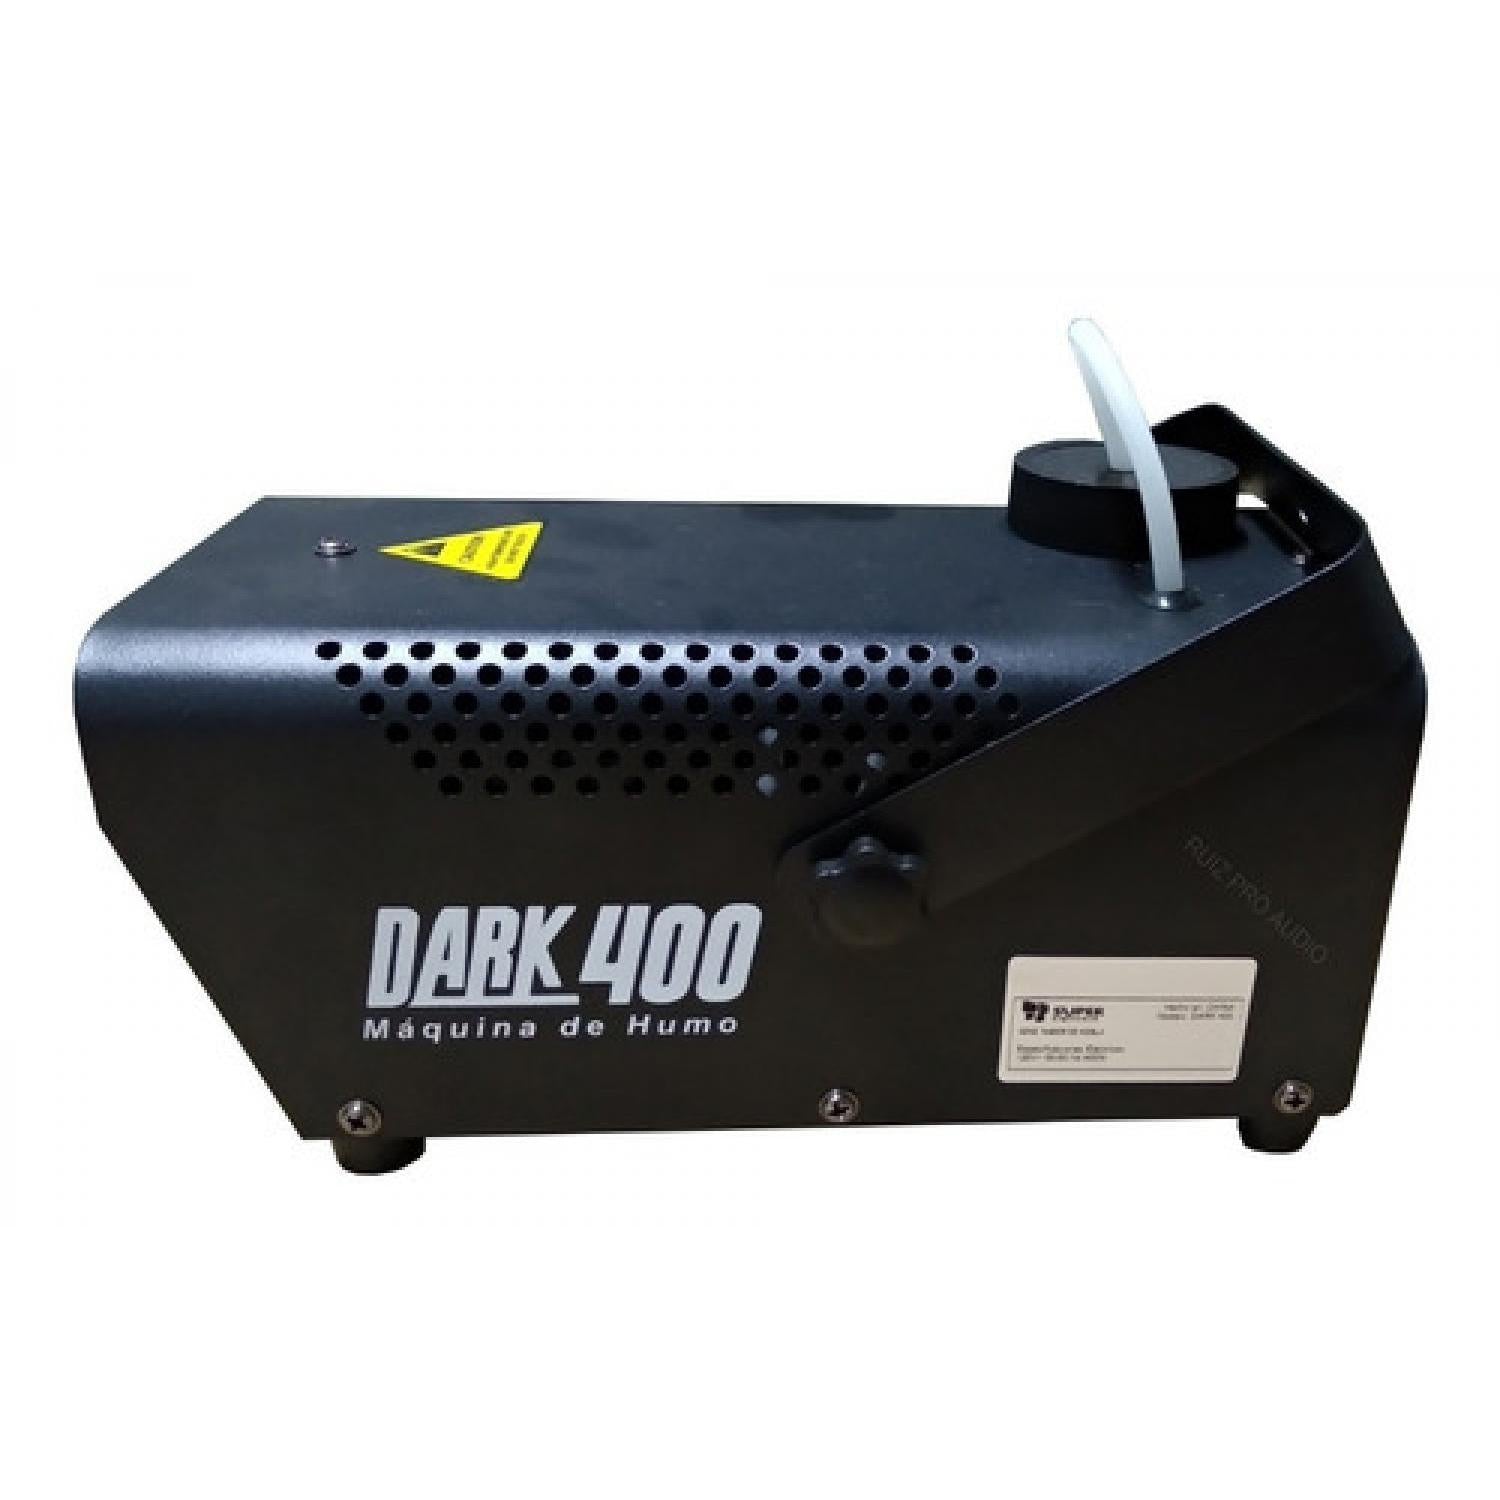 Party SM400 - Máquina de humo, mini, potencia 400w, color Negro